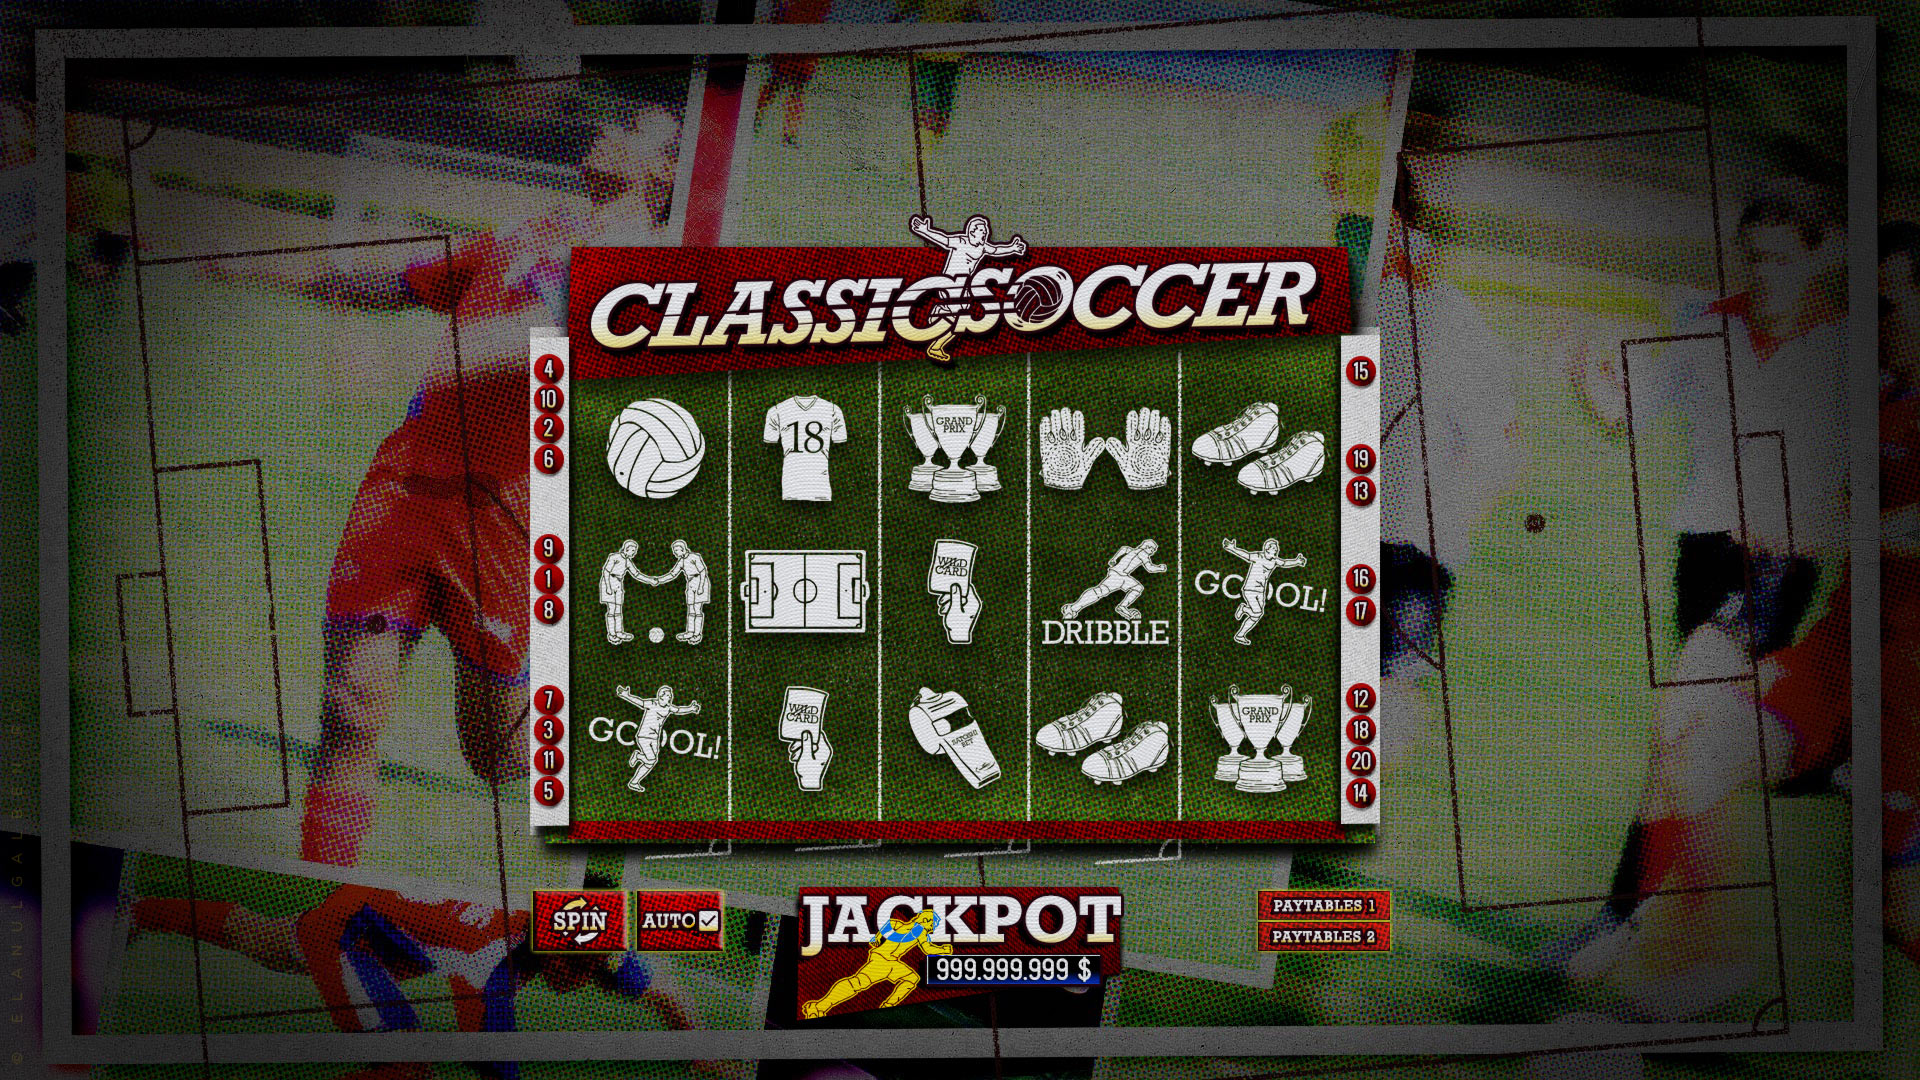 Online Casino Game Design - Slot machine game - Classic Soccer